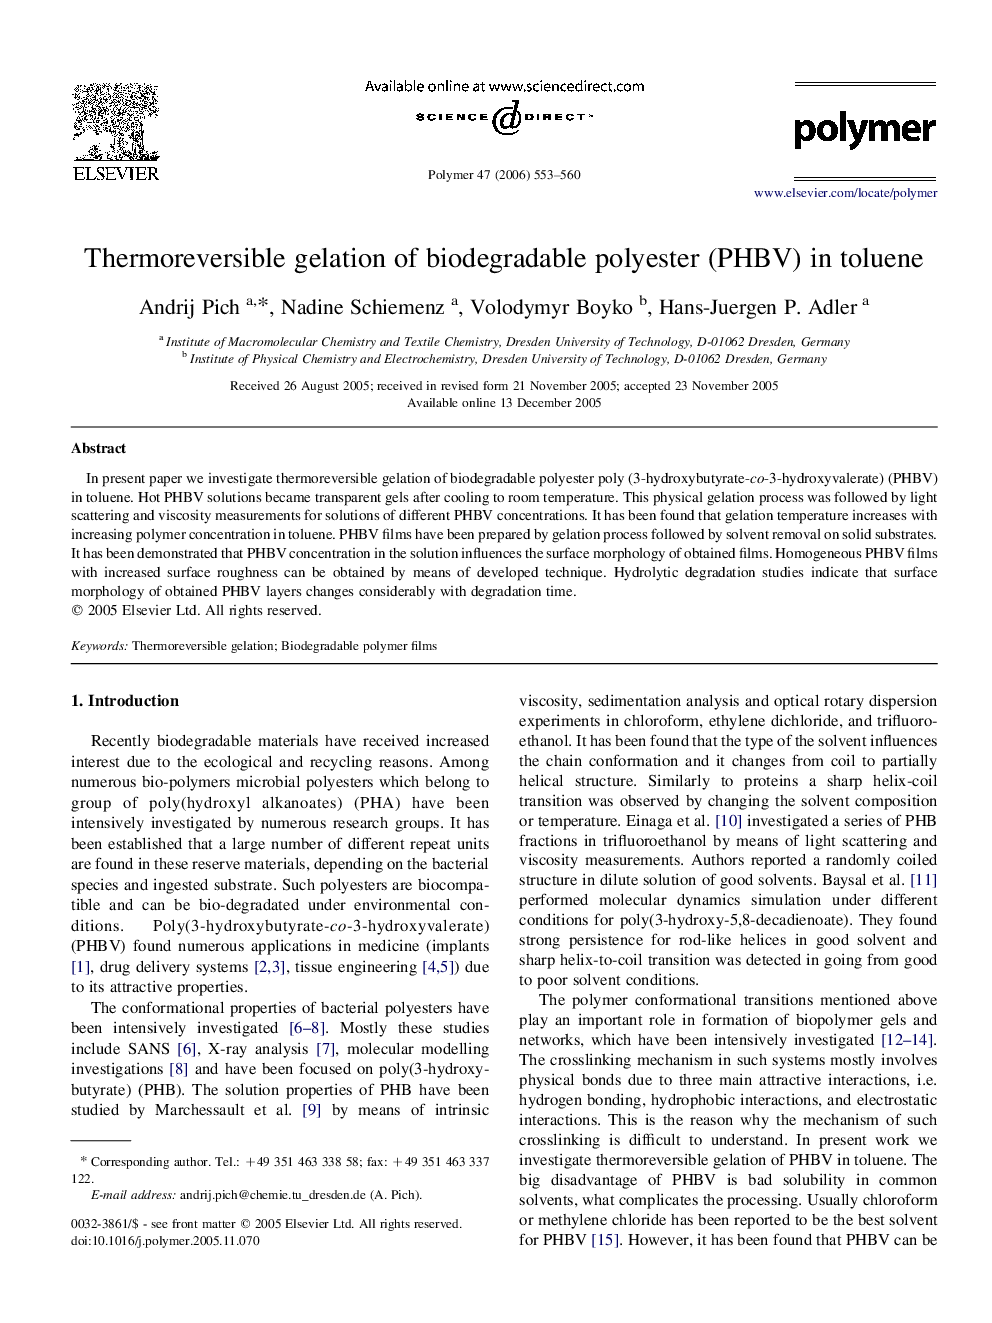 Thermoreversible gelation of biodegradable polyester (PHBV) in toluene